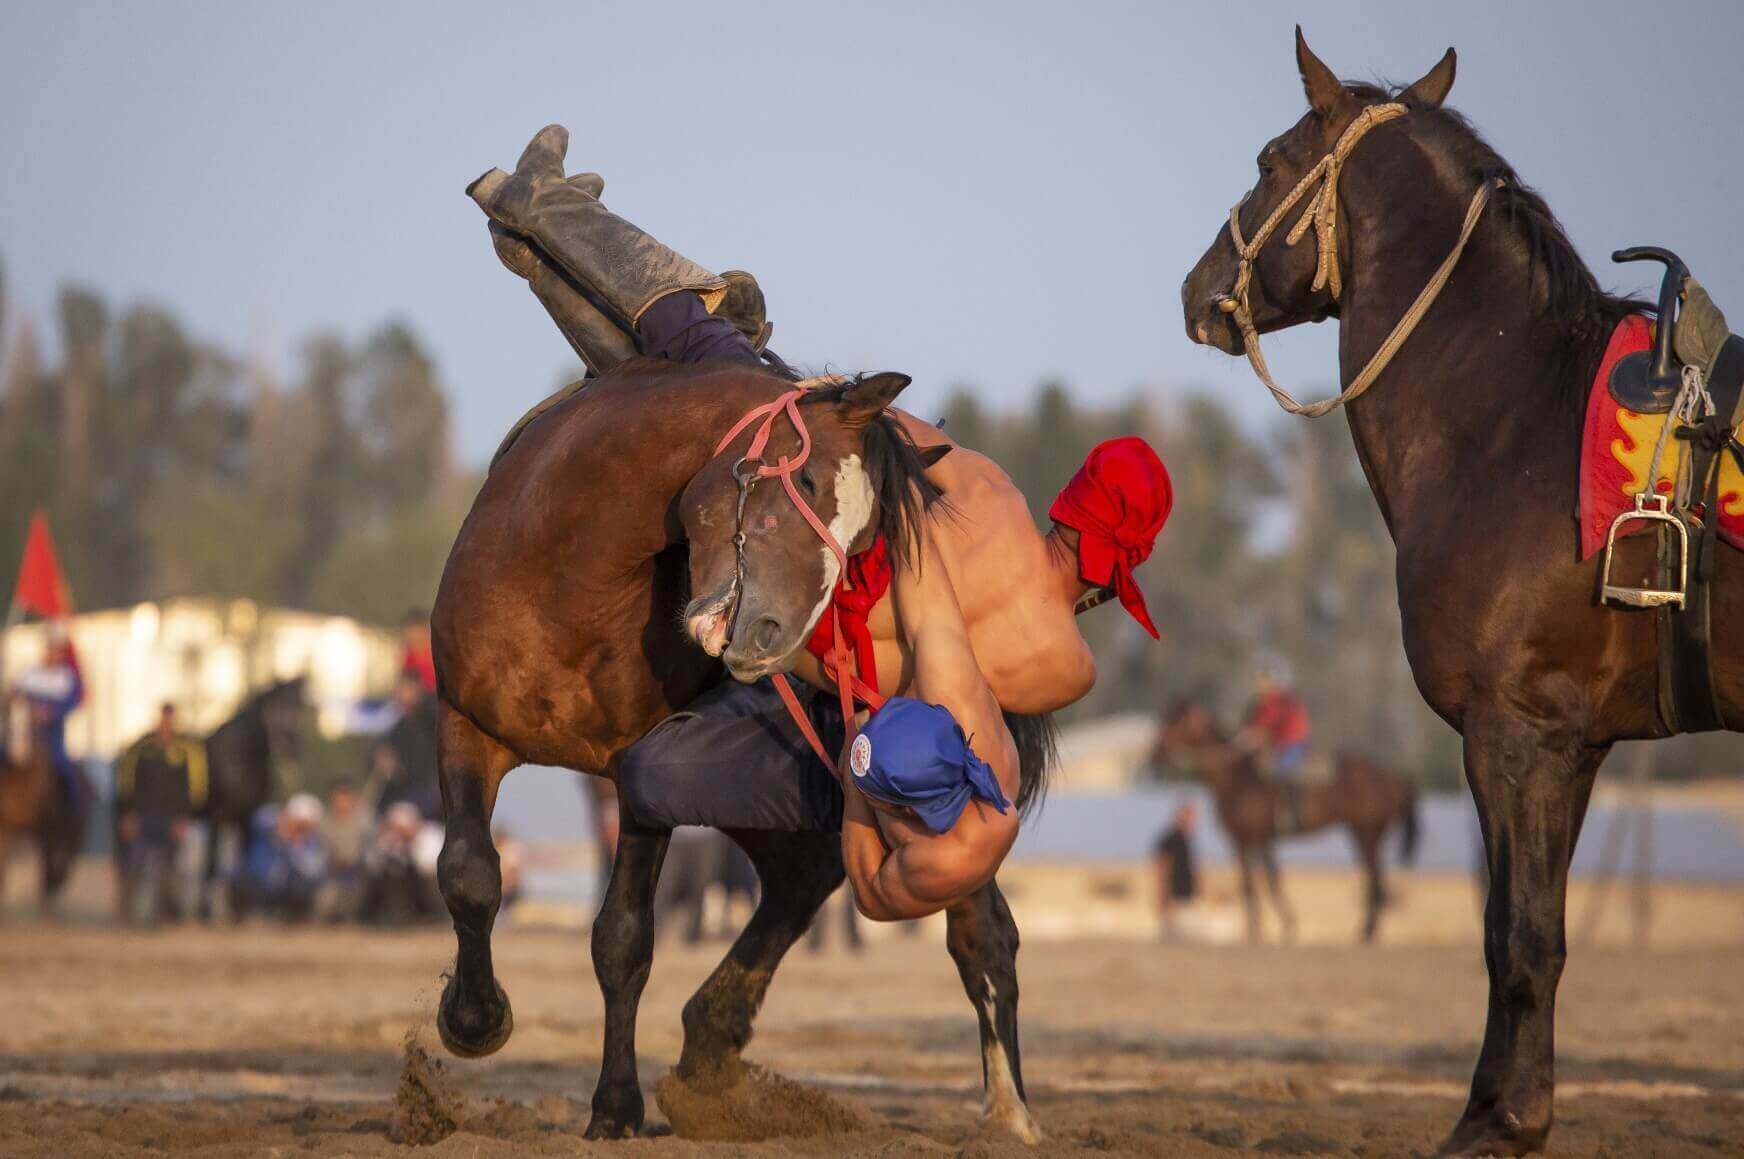 Athletes wrestling on a horseback at the World Nomad Games